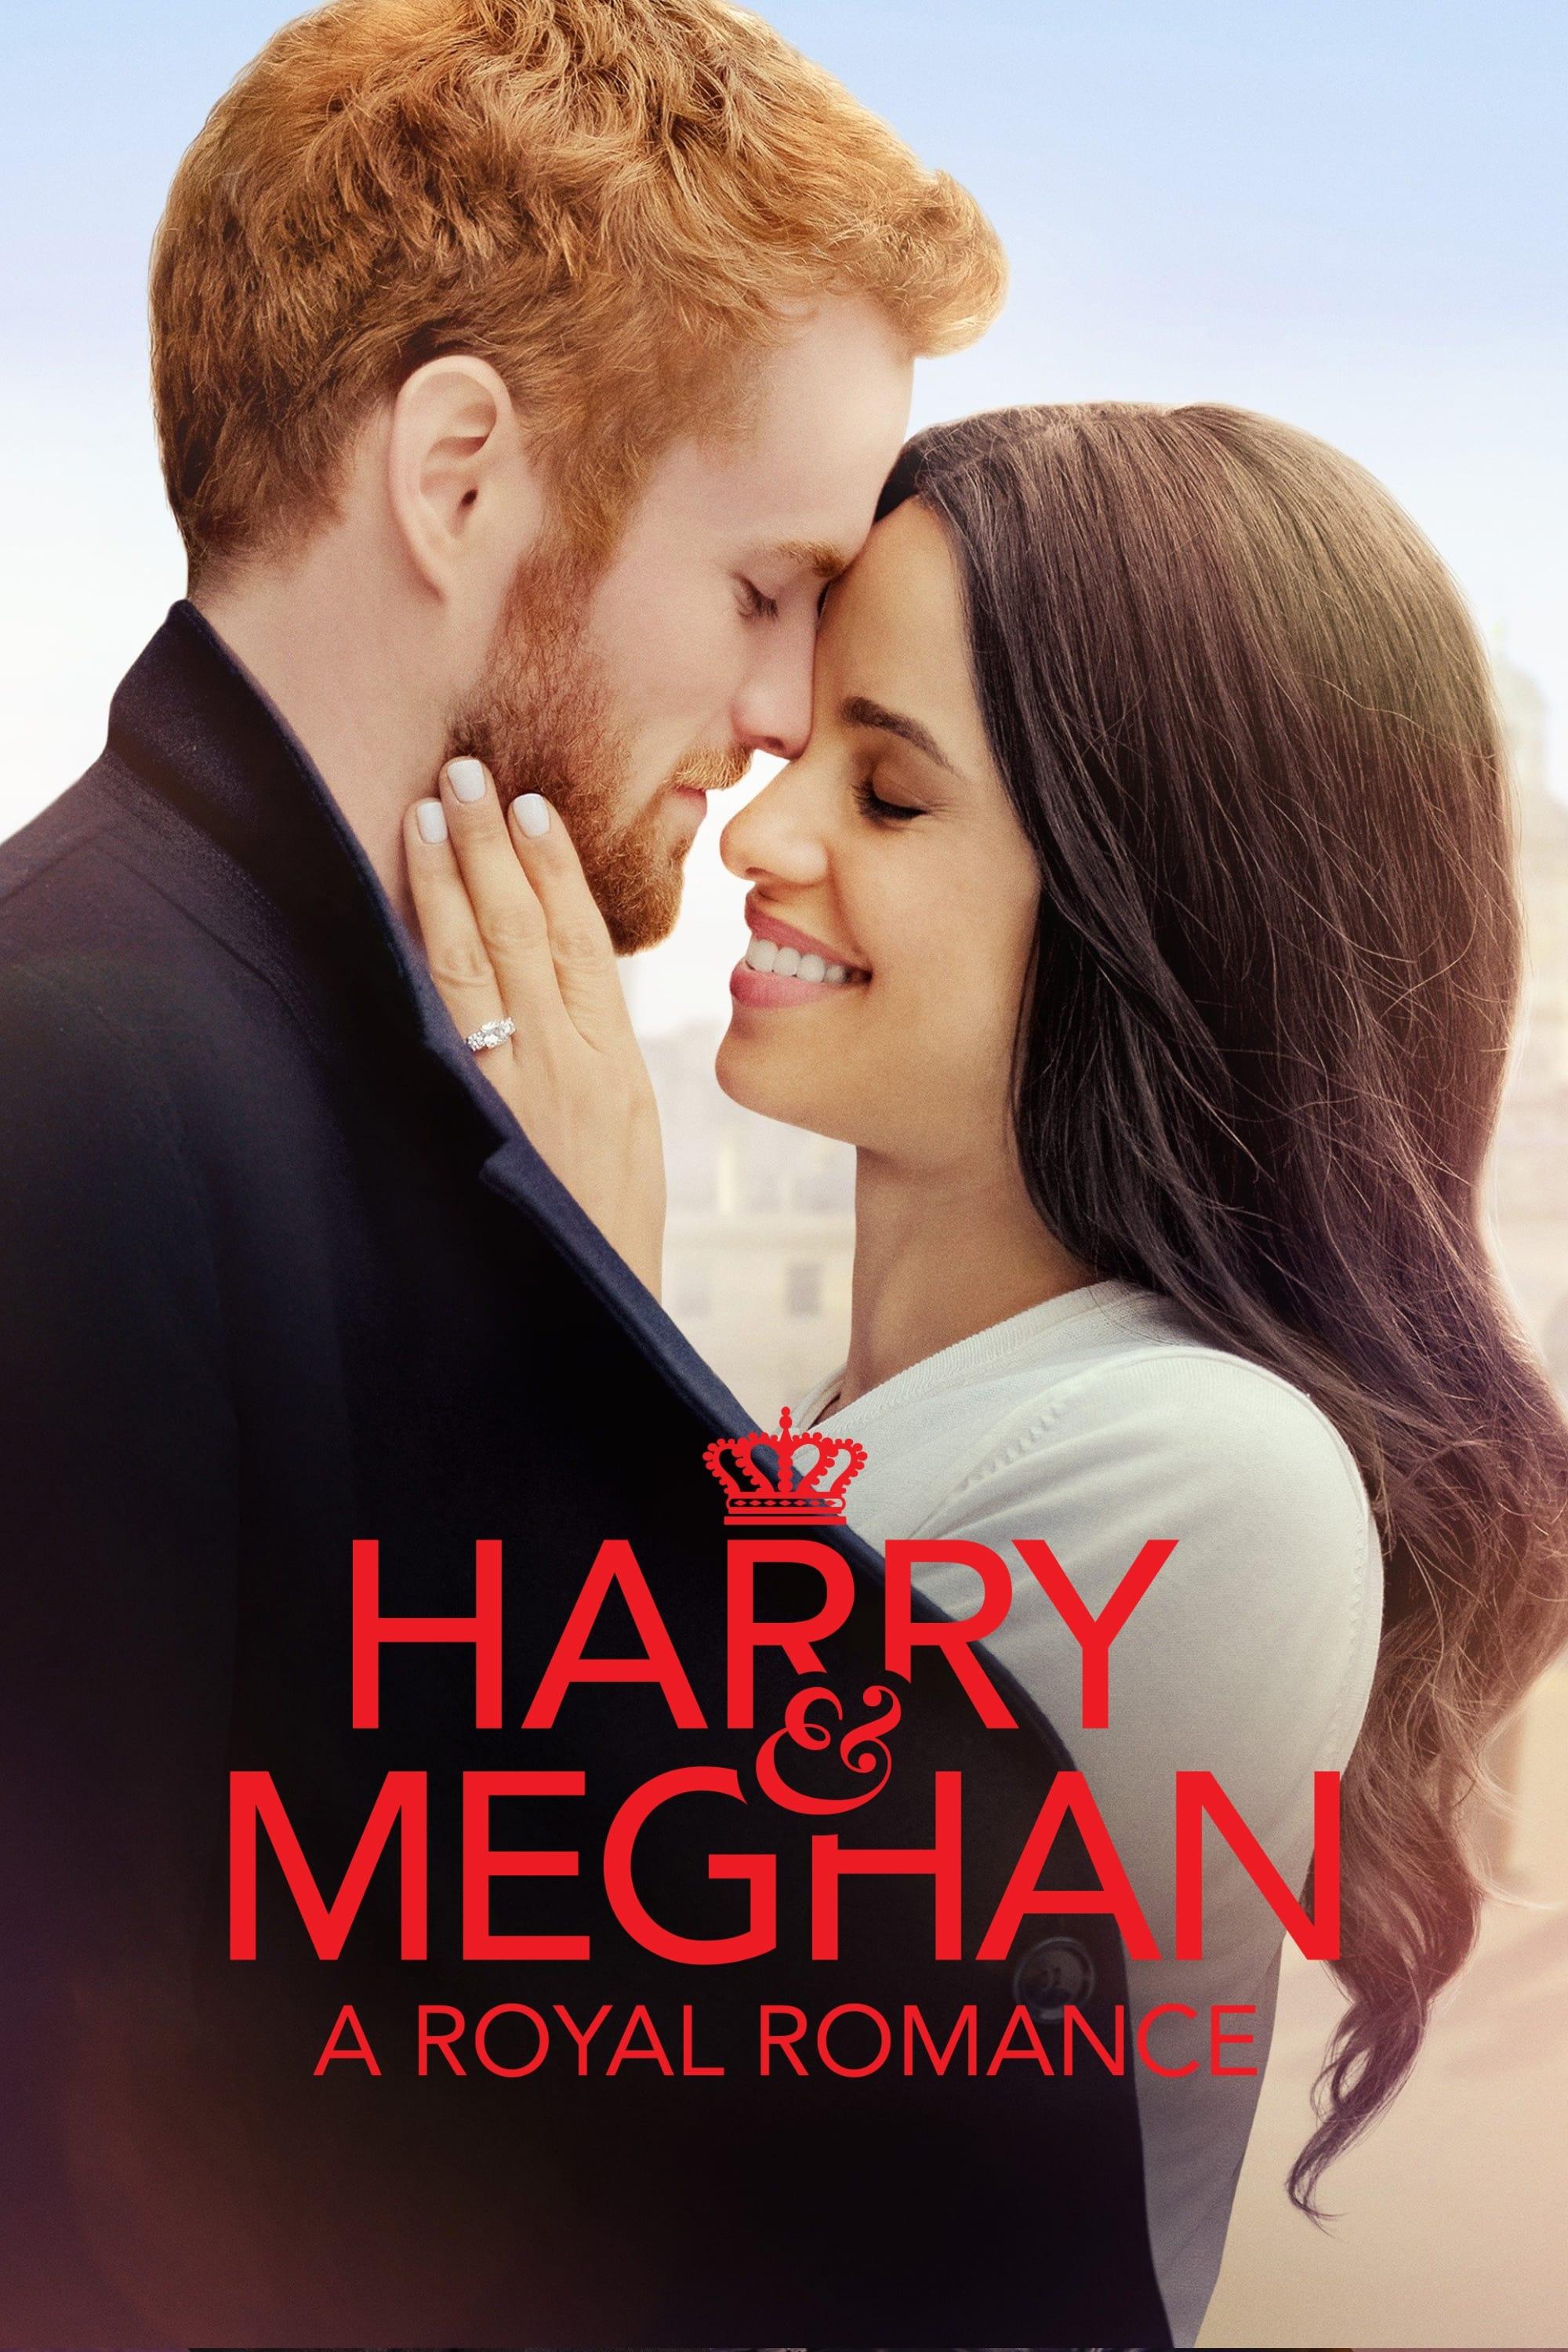 Harry & Meghan: A Royal Romance poster